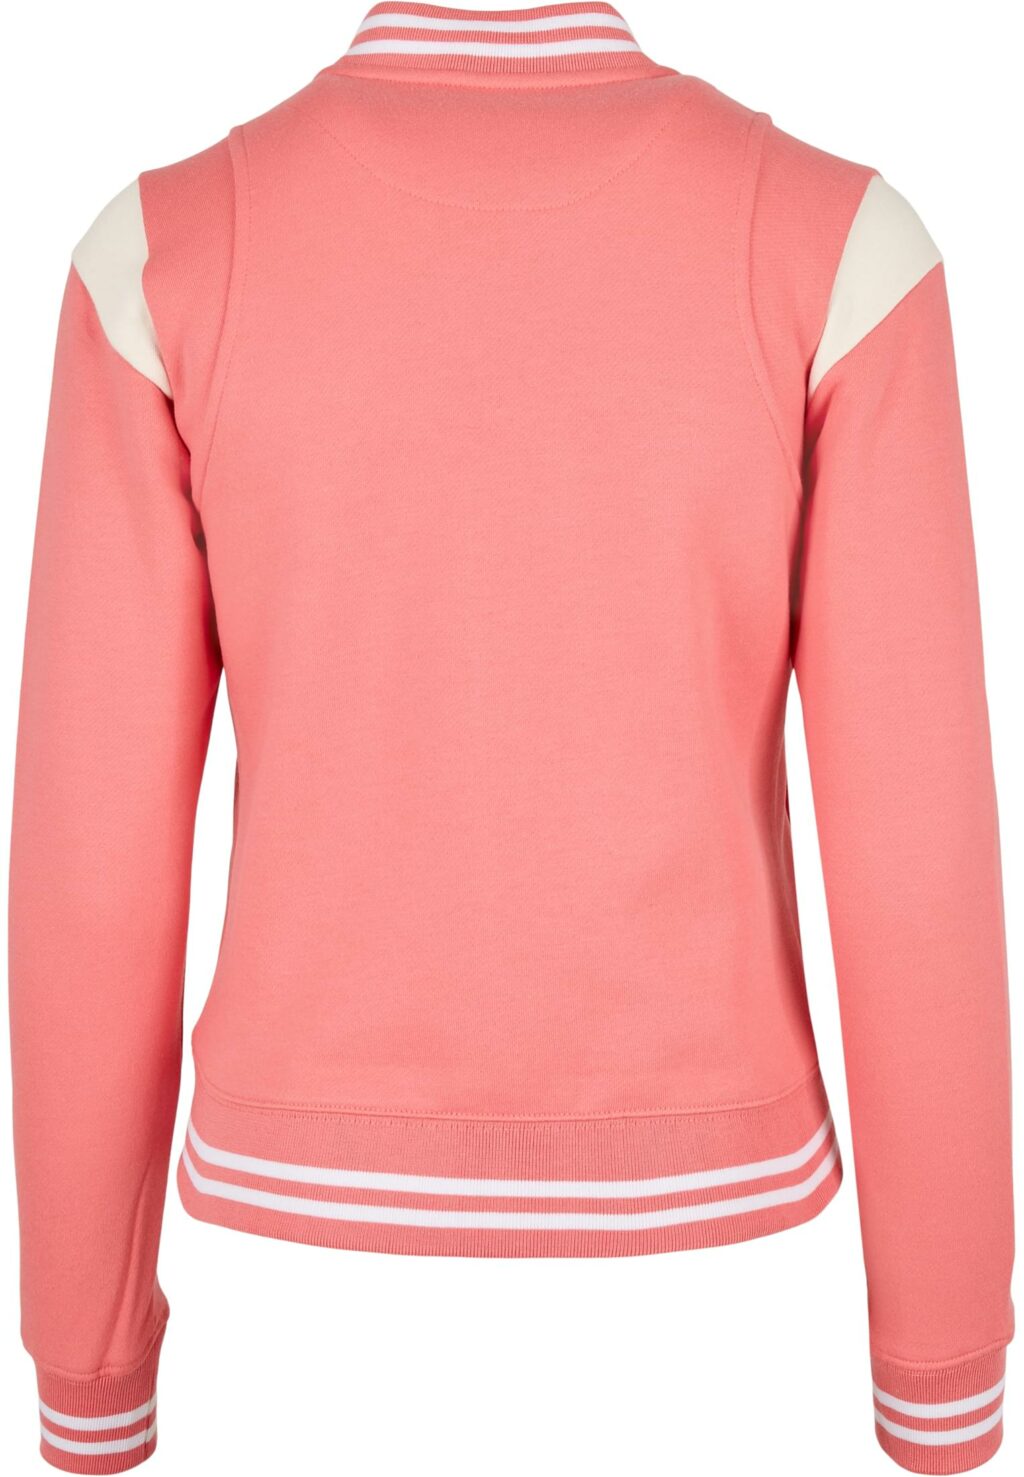 Urban Classics Ladies Inset College Sweat Jacket palepink/whitesand TB2618